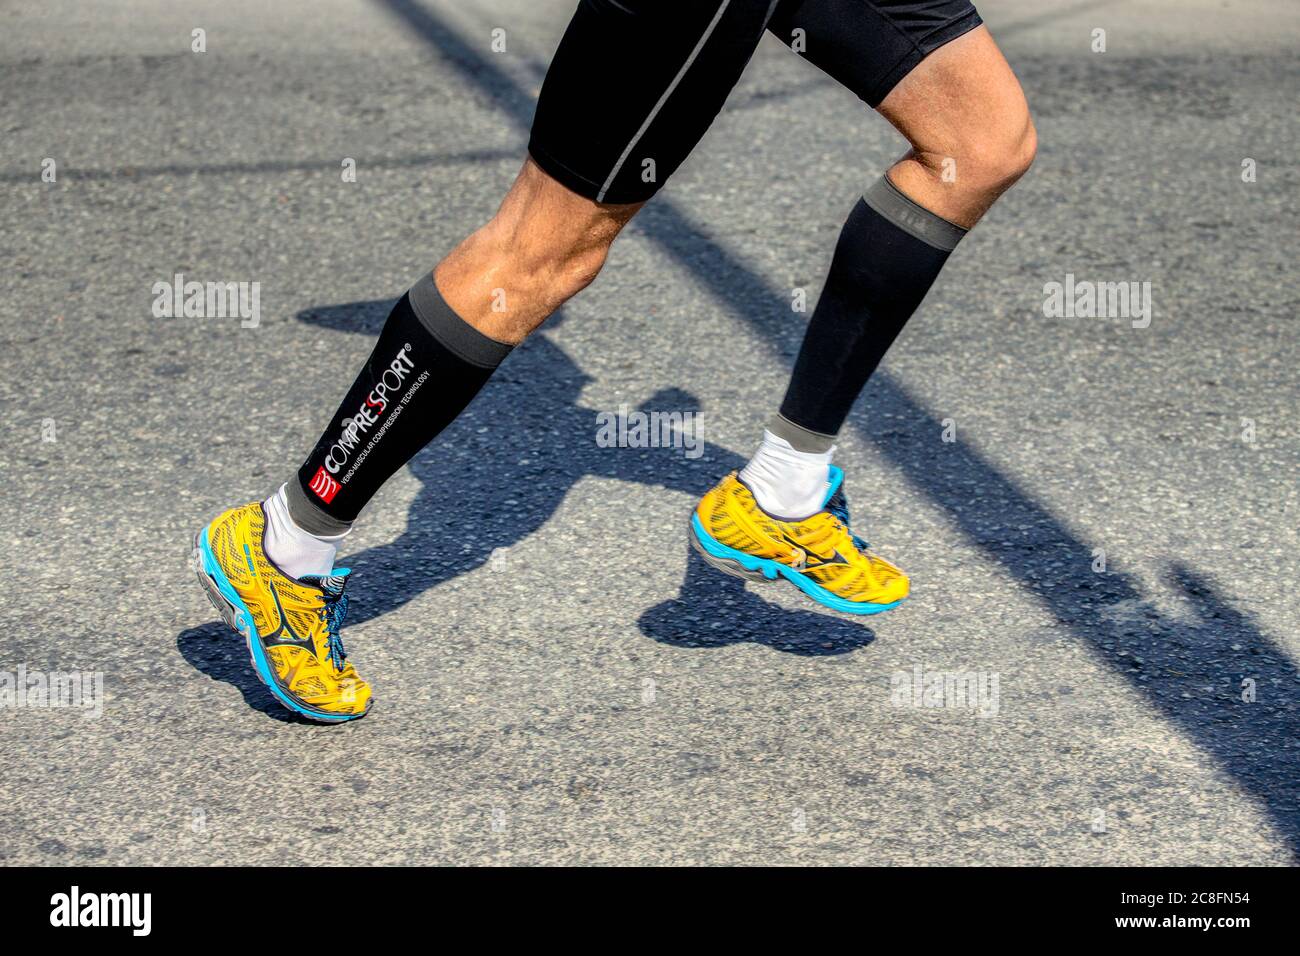 legs man runner in running shoes Mizuno 